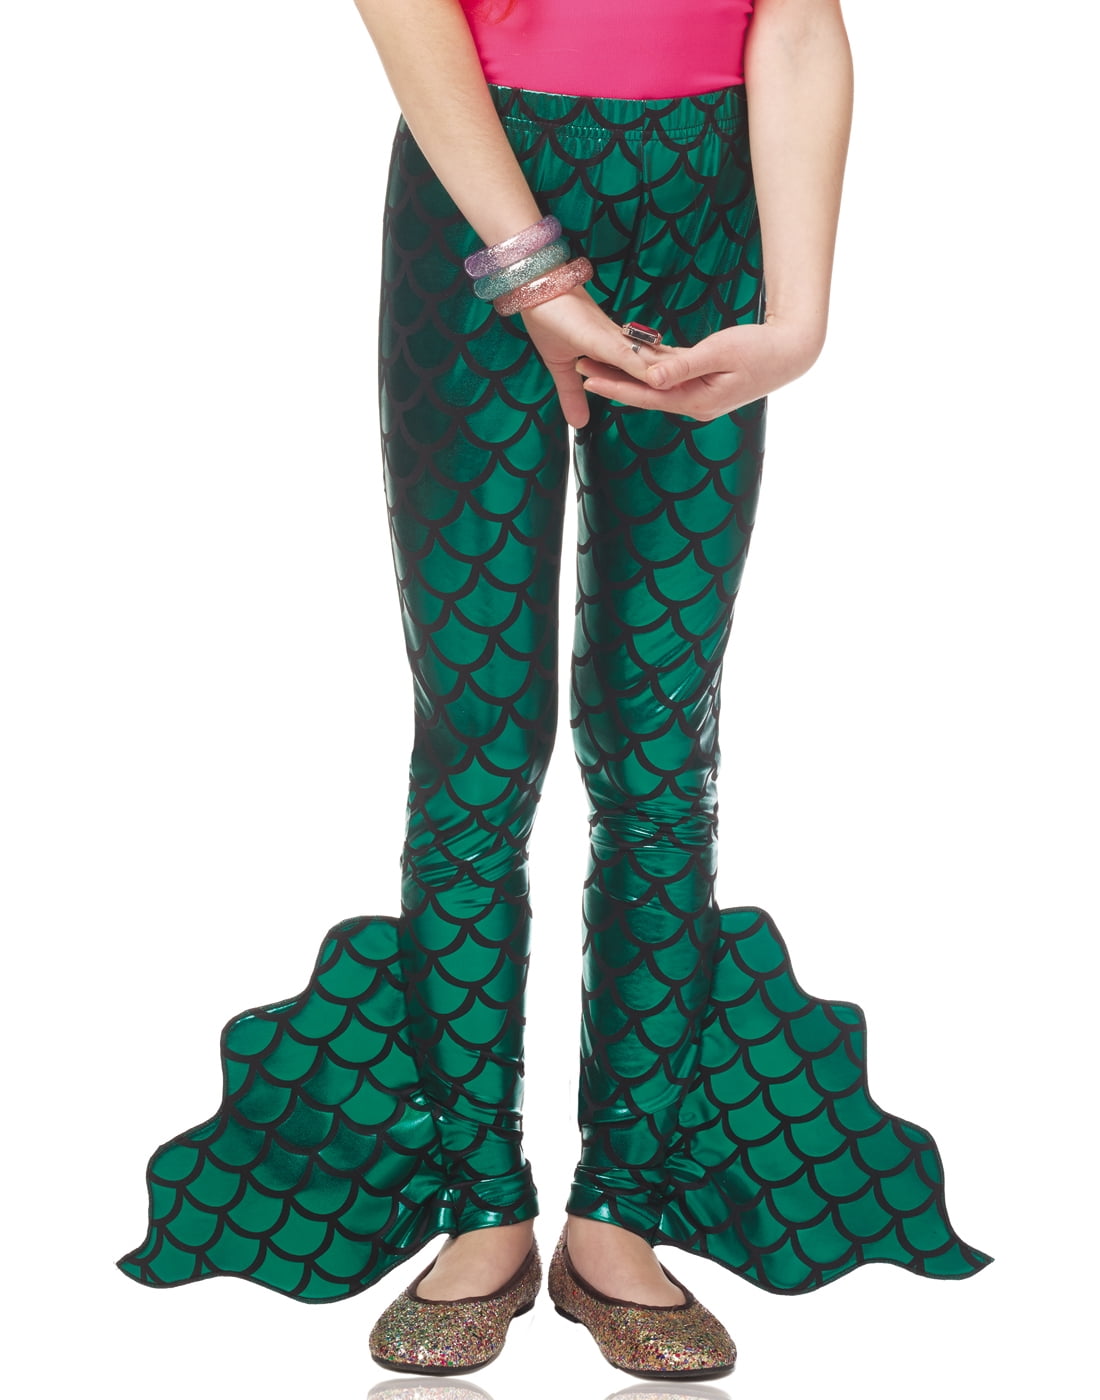 Mermaid Pants Green Fin Mythical Creature Girls Child Costume Leggings